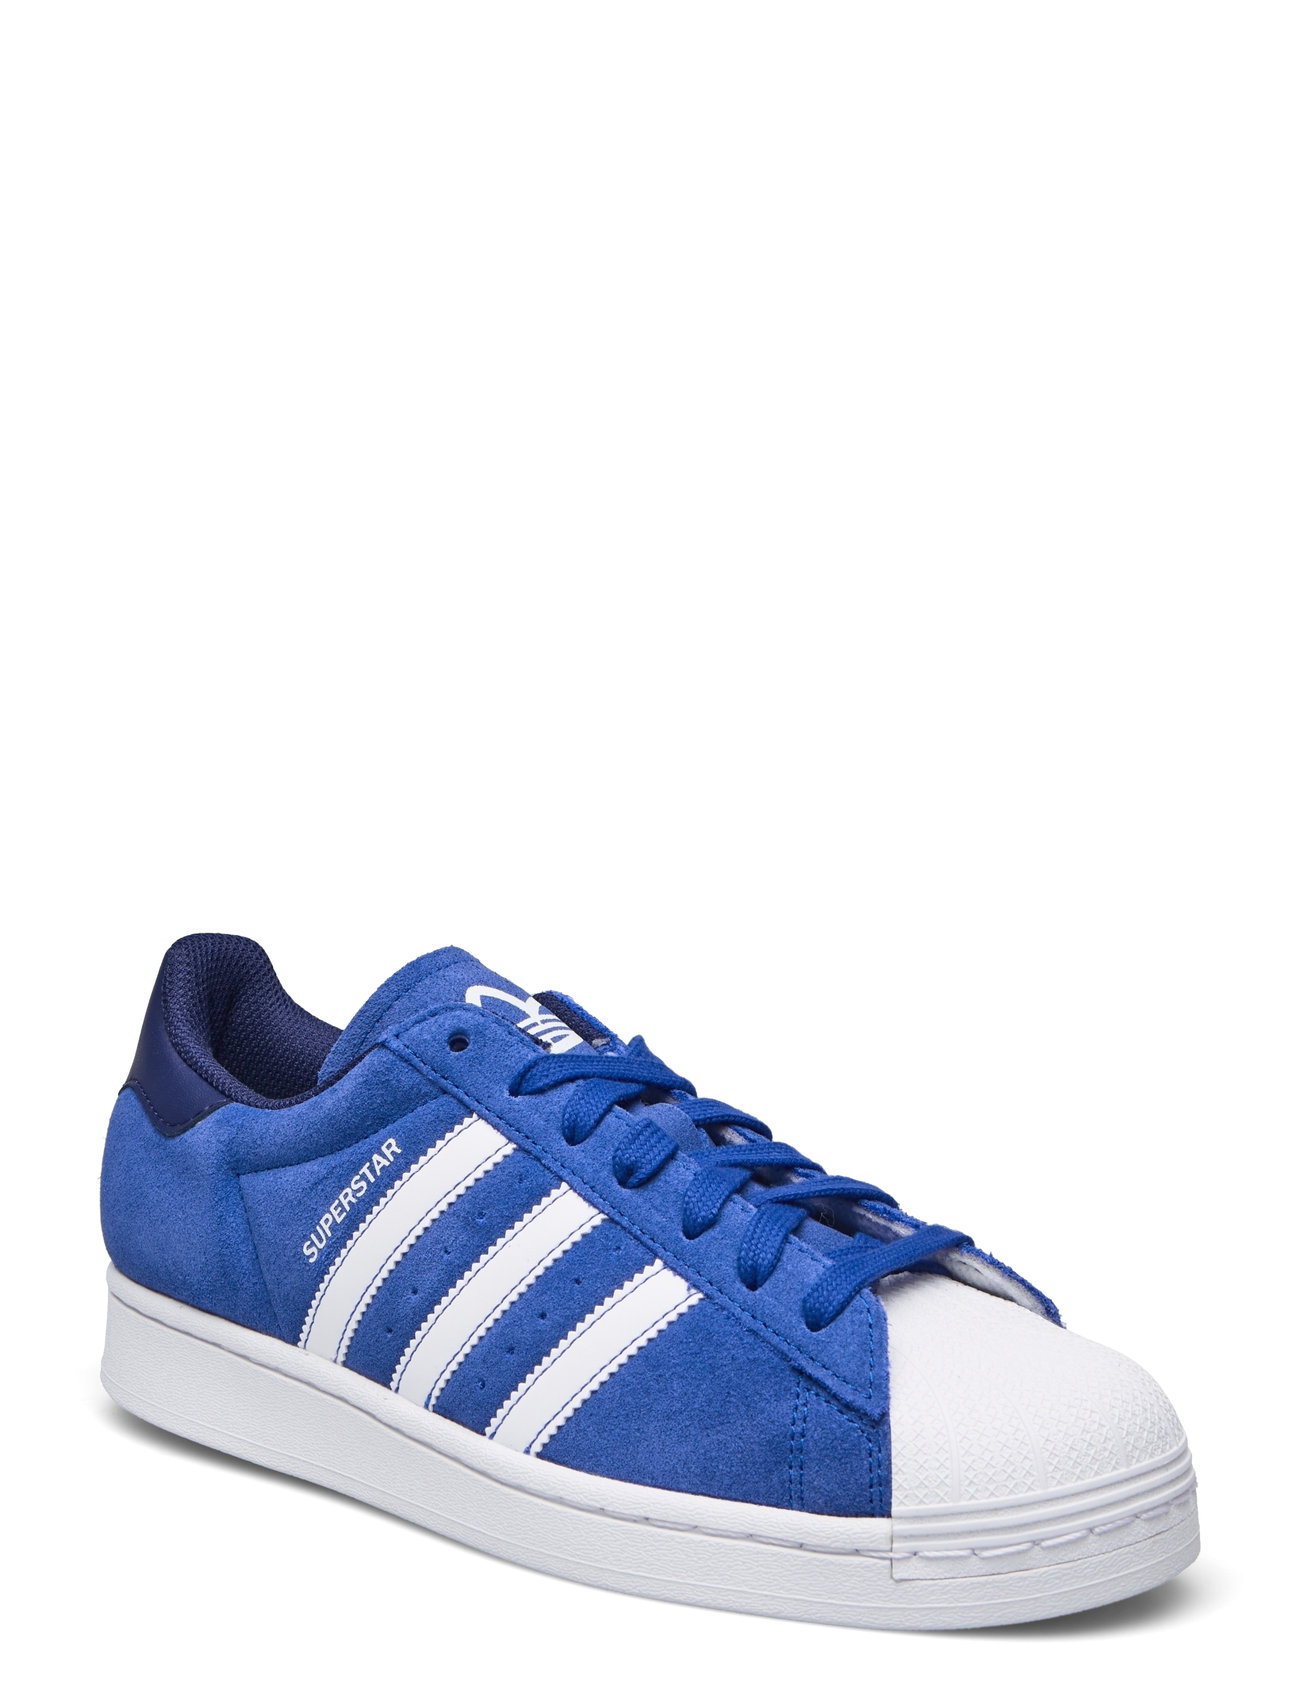 Superstar Sport Sneakers Low-top Sneakers Blue Adidas Originals